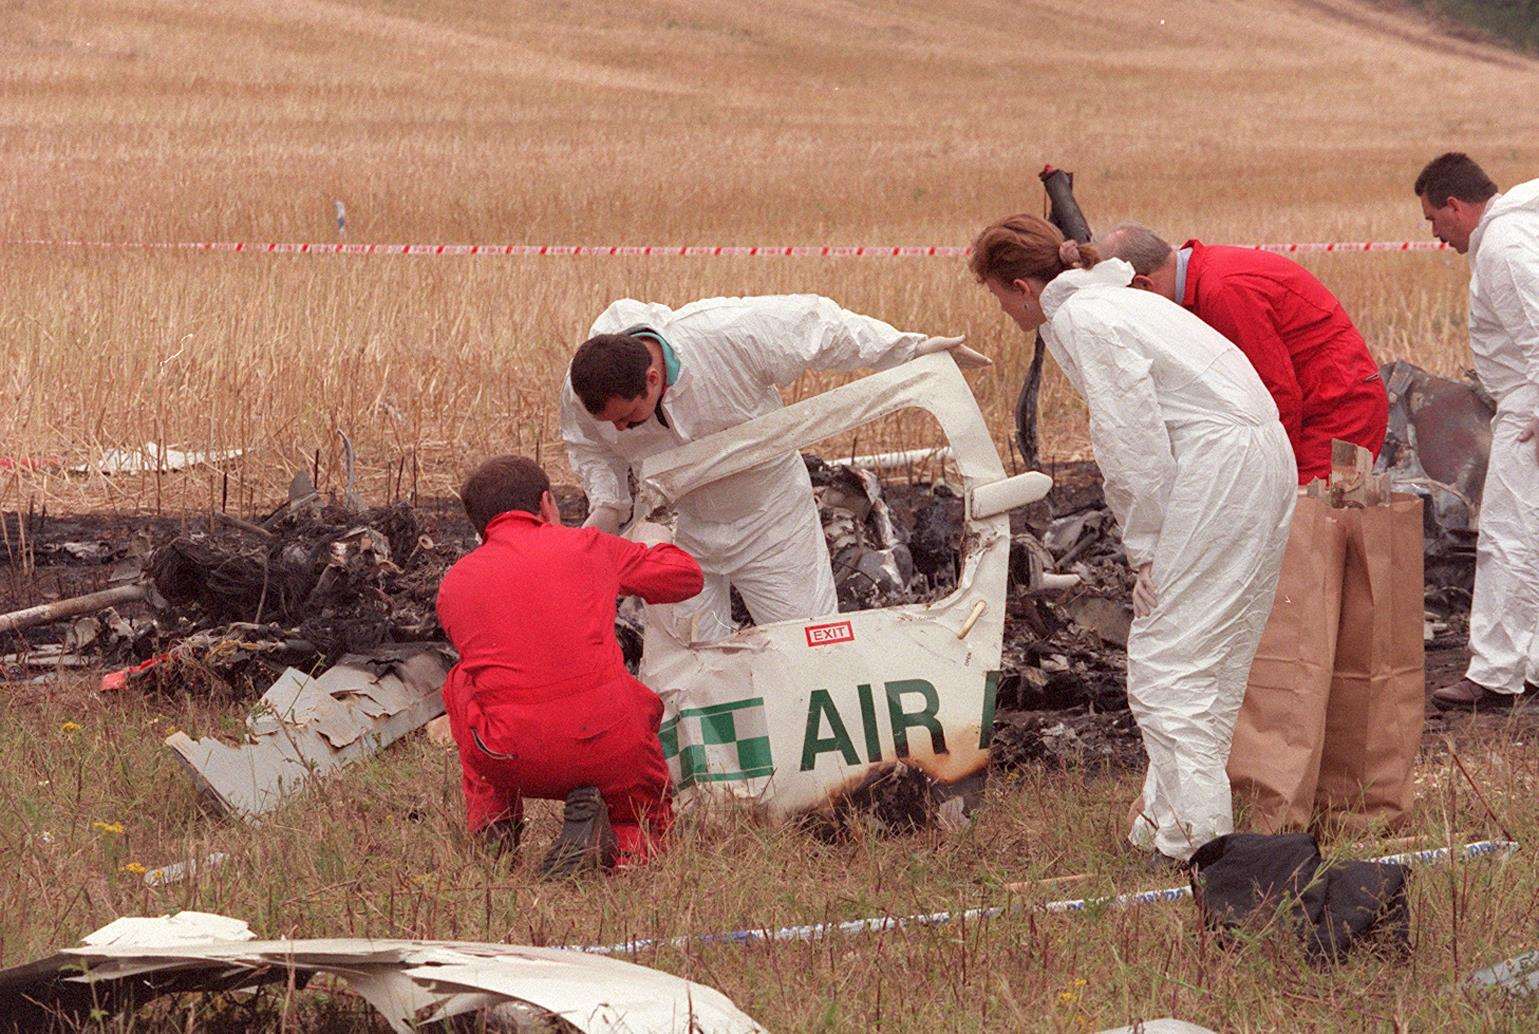 The Kent Air Ambulance crash in 1998